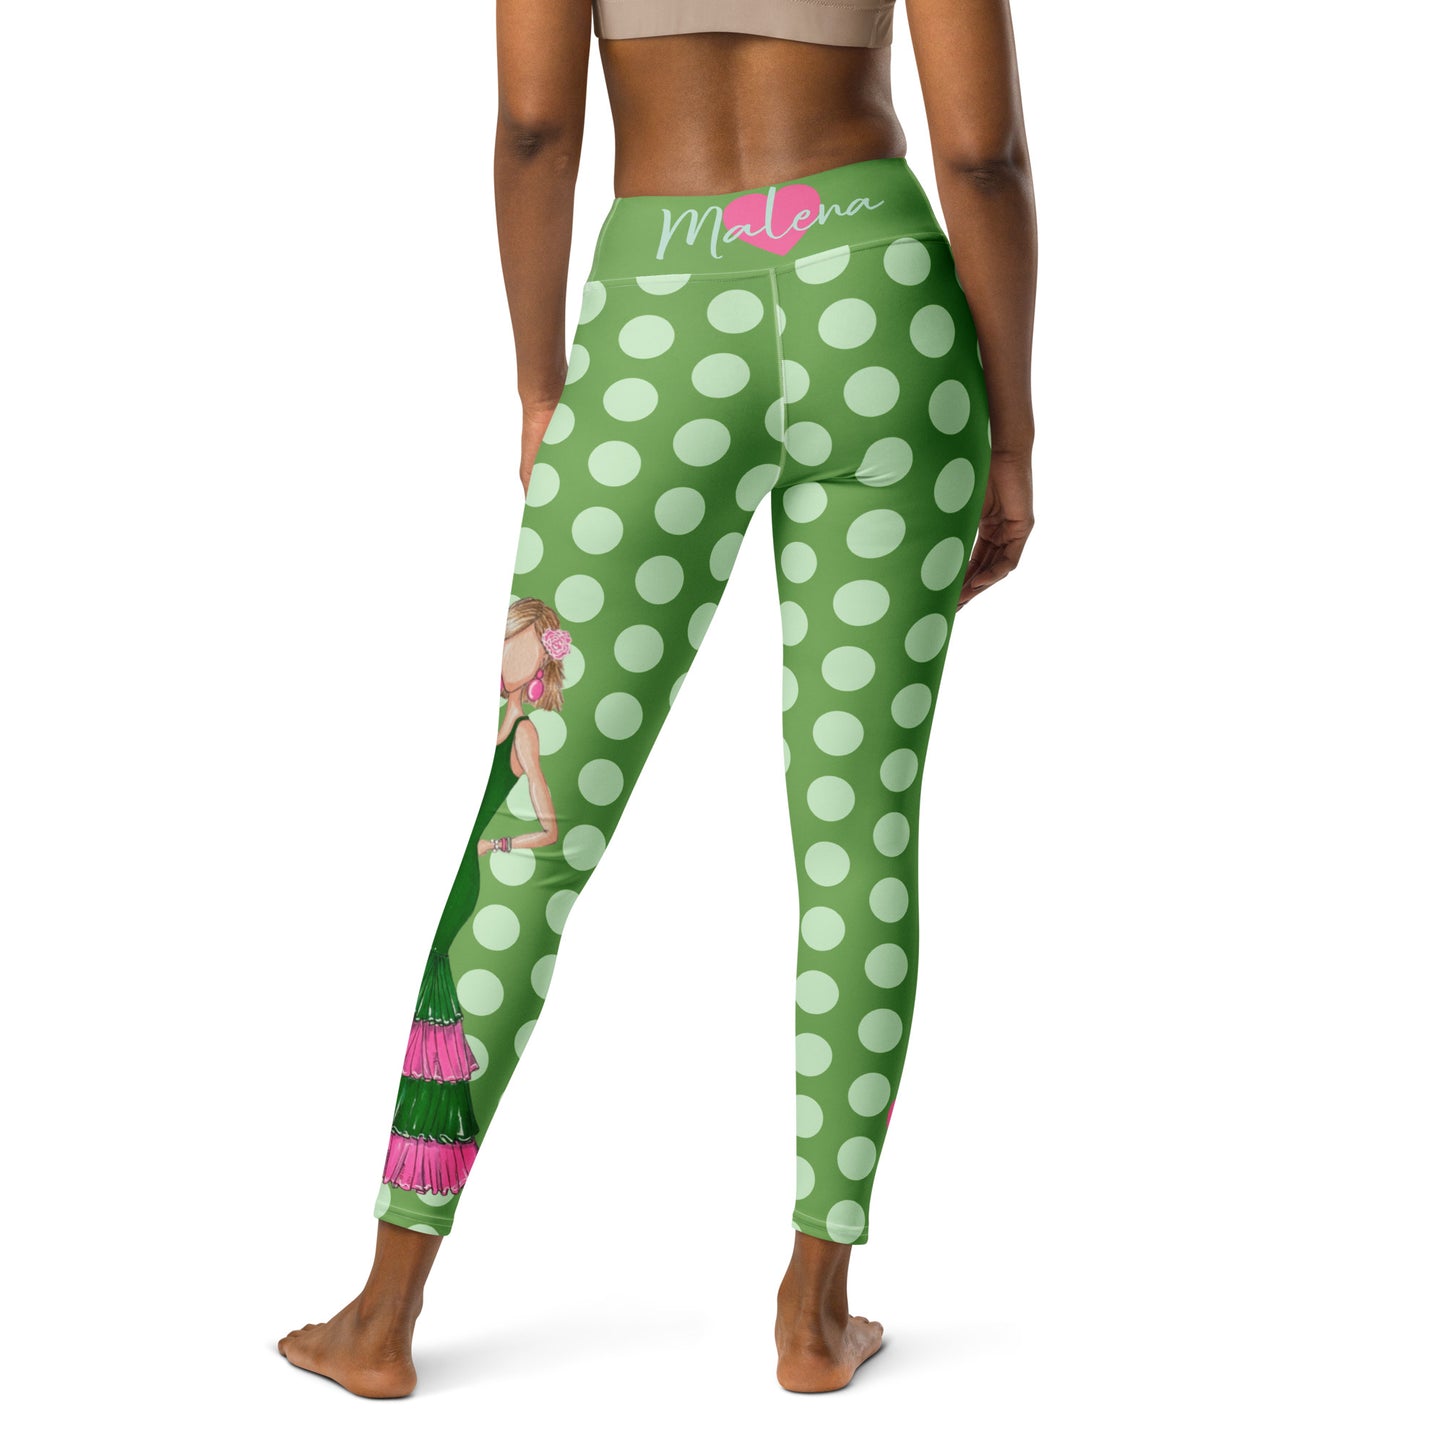 Flamenco Dancer Leggings, green high waisted yoga leggings with a green and pink dress design and green polka dots - IllustrArte